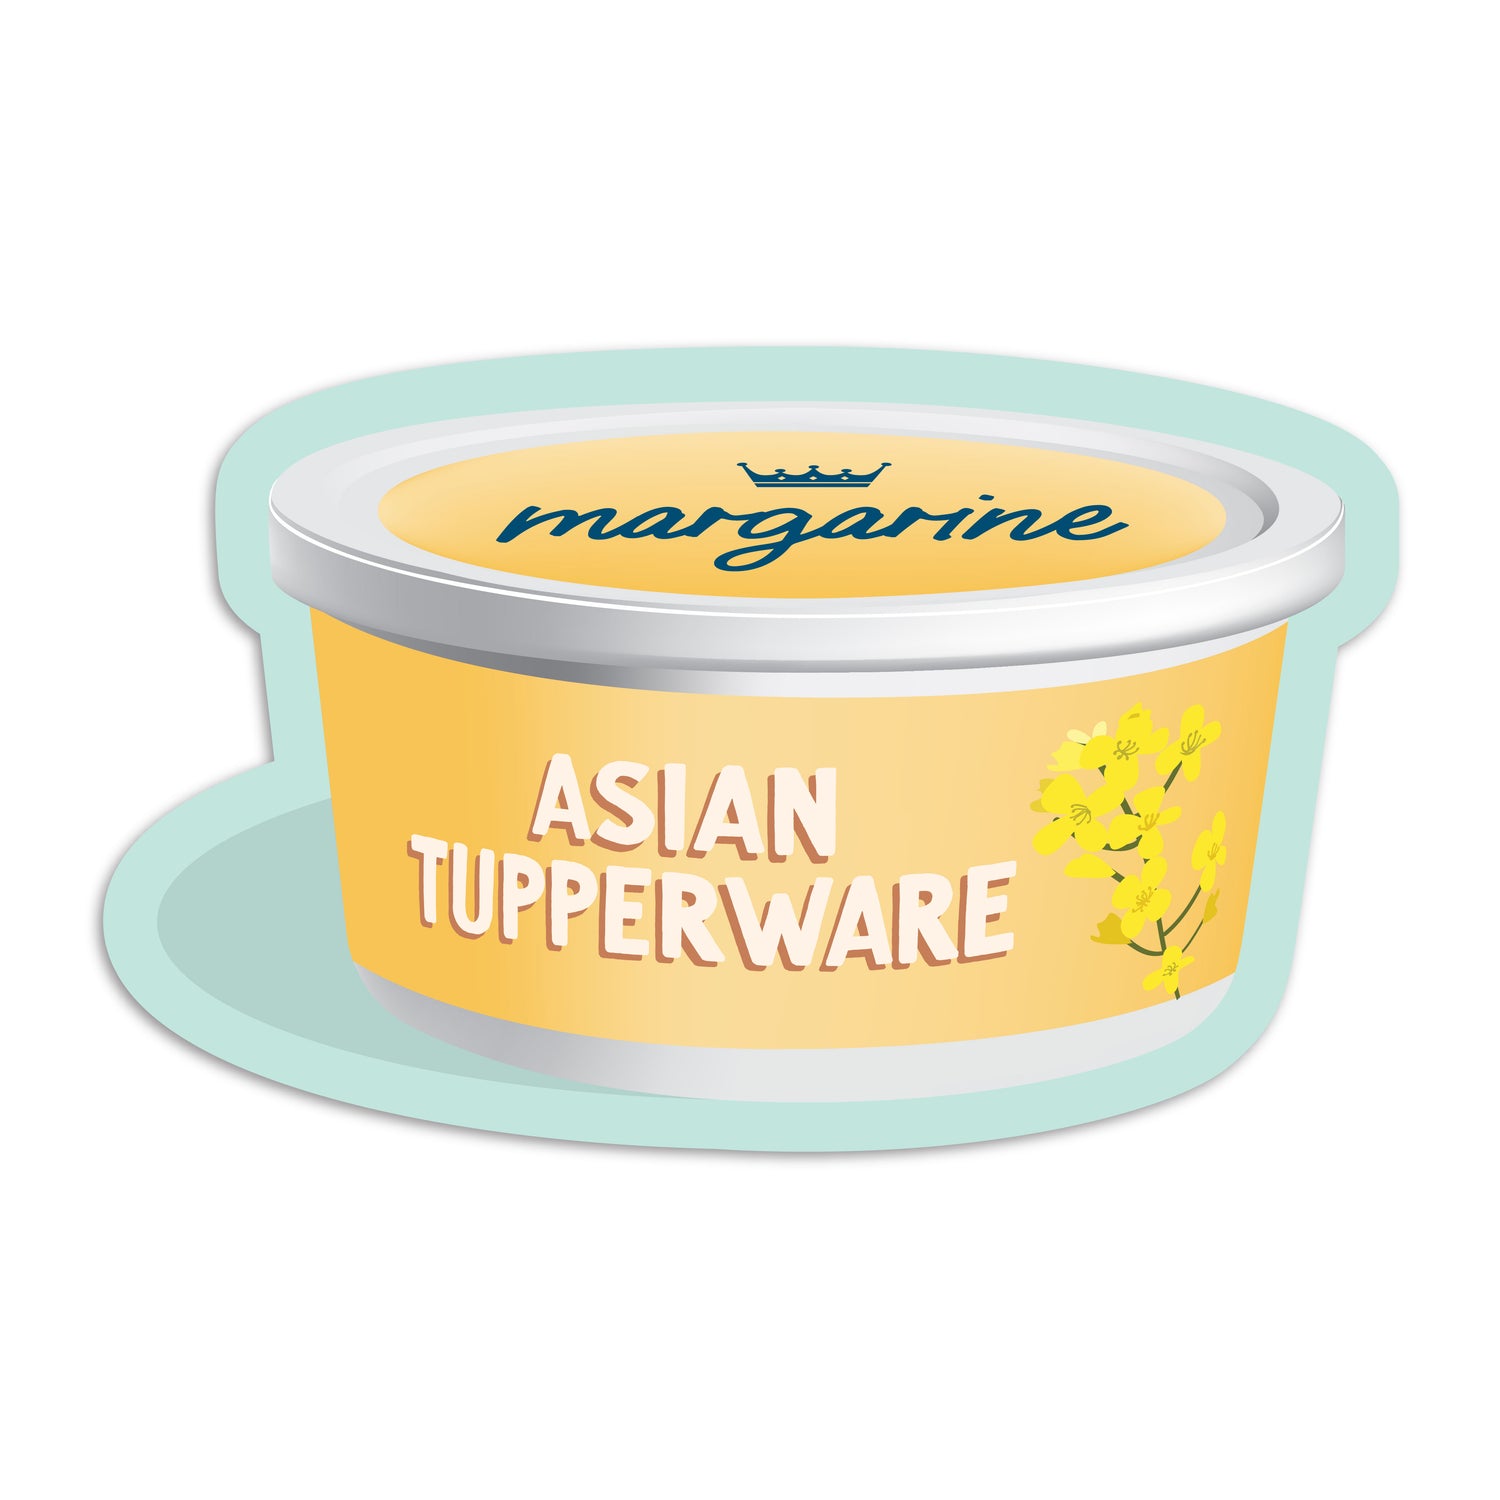 Asian tupperware vinyl sticker by I&